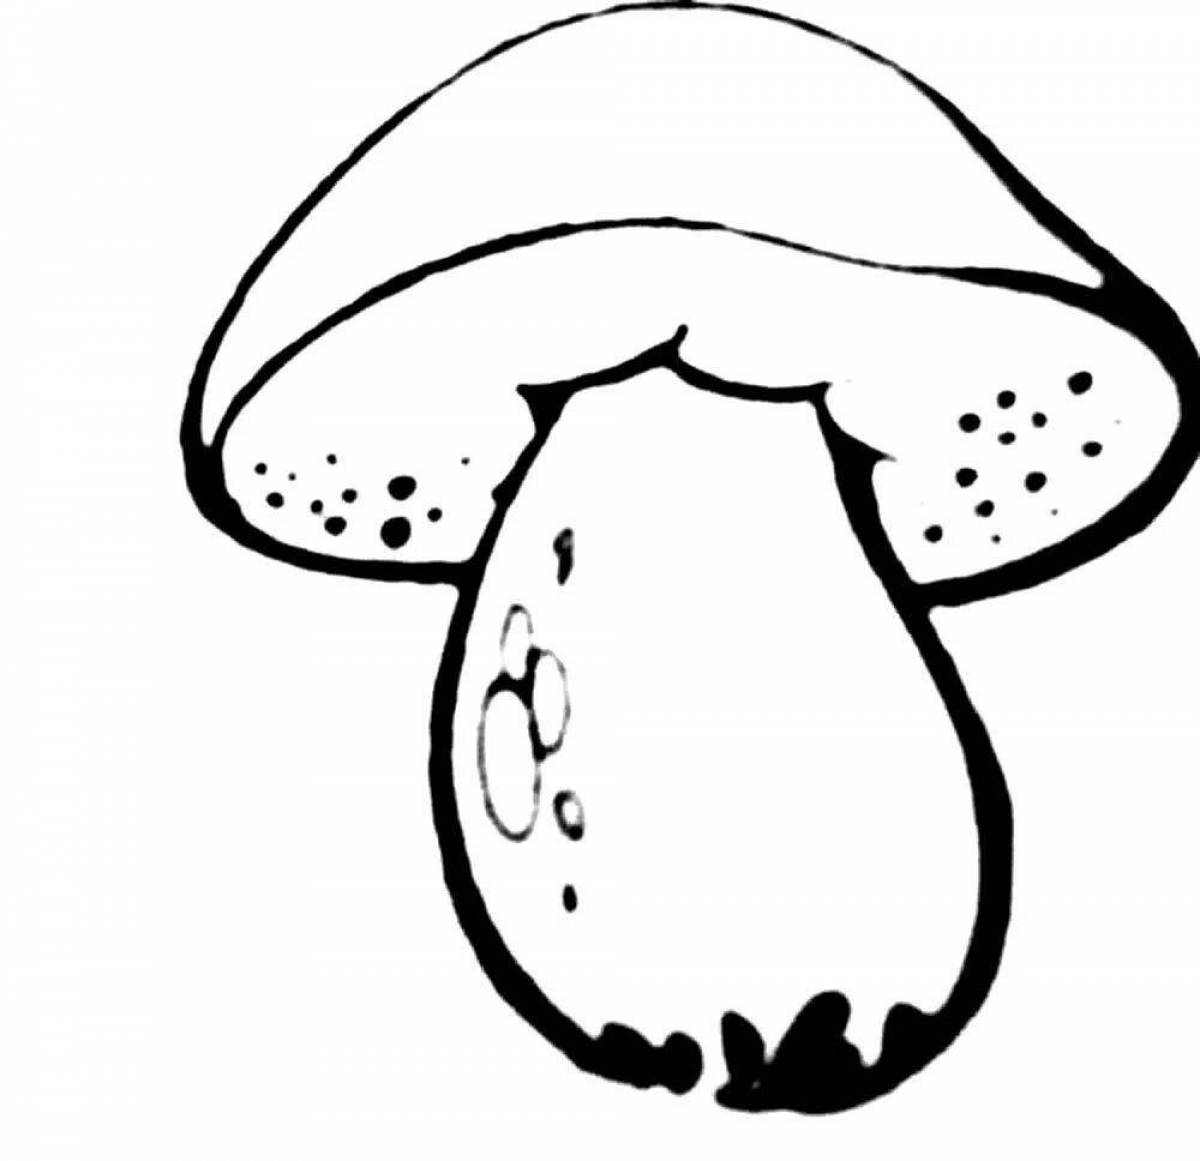 Fun coloring with porcini mushrooms